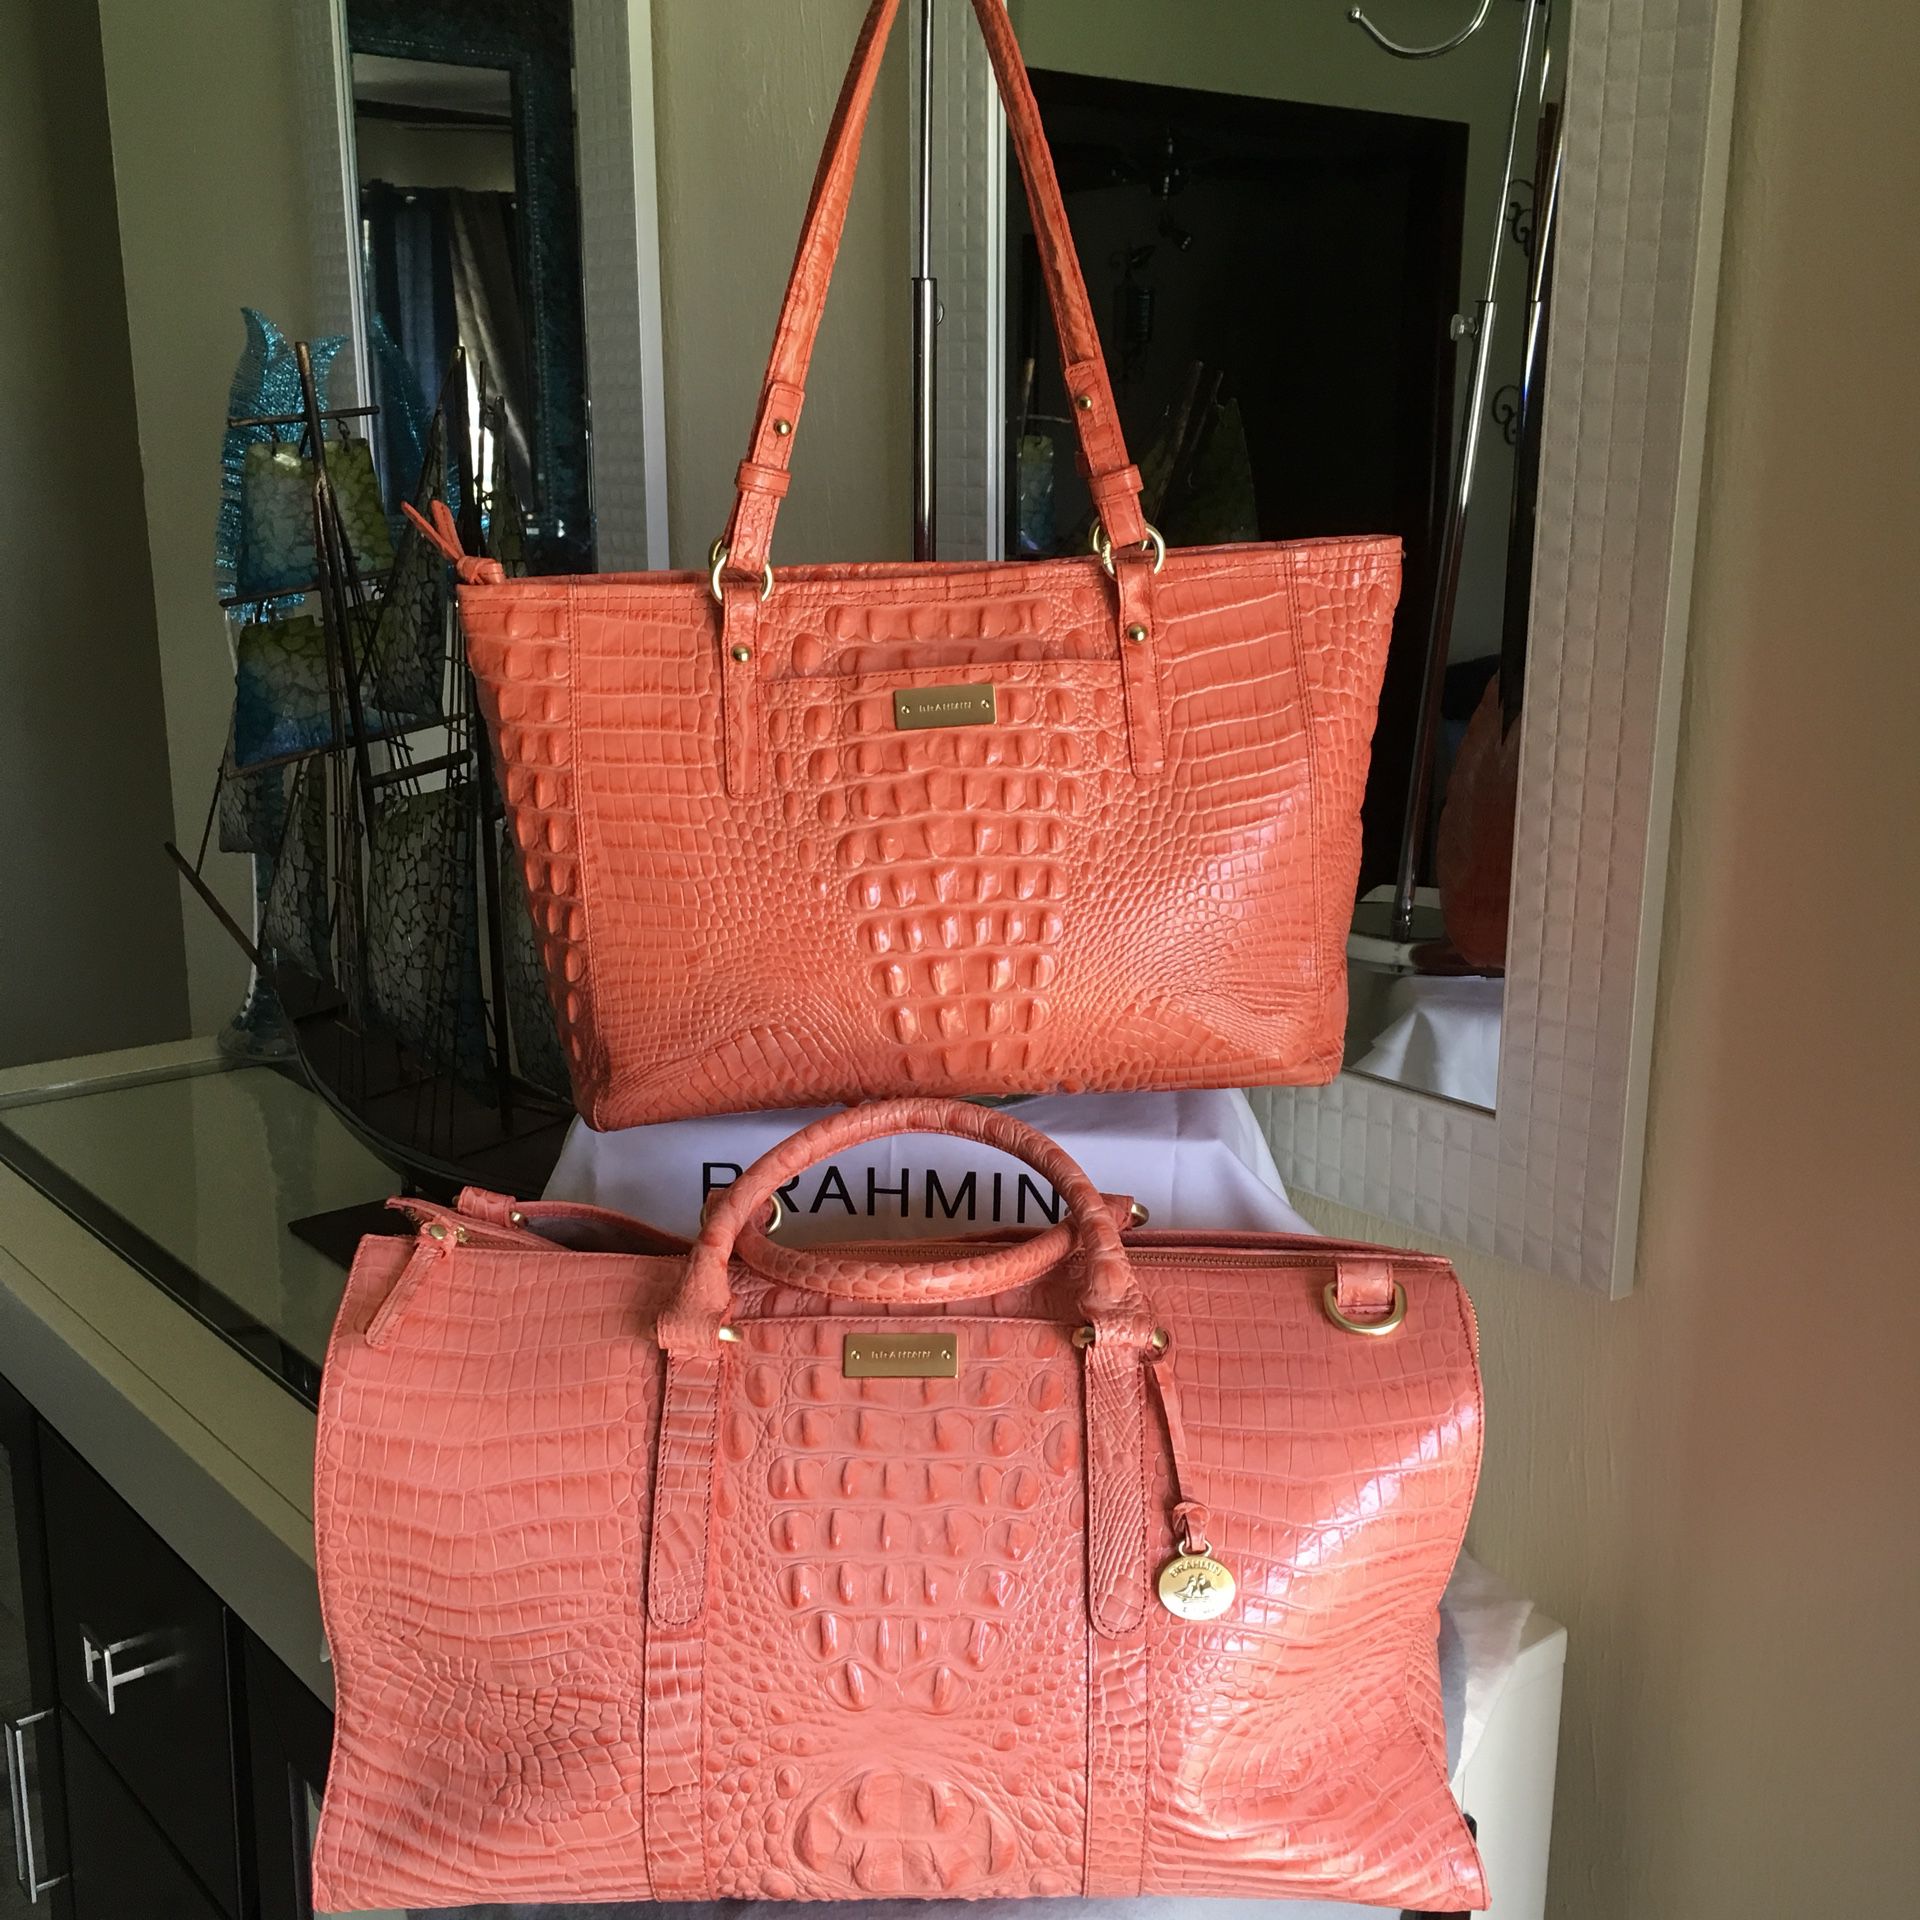 BRAHMIN CROSSBODY BAG for Sale in Port St. Lucie, FL - OfferUp